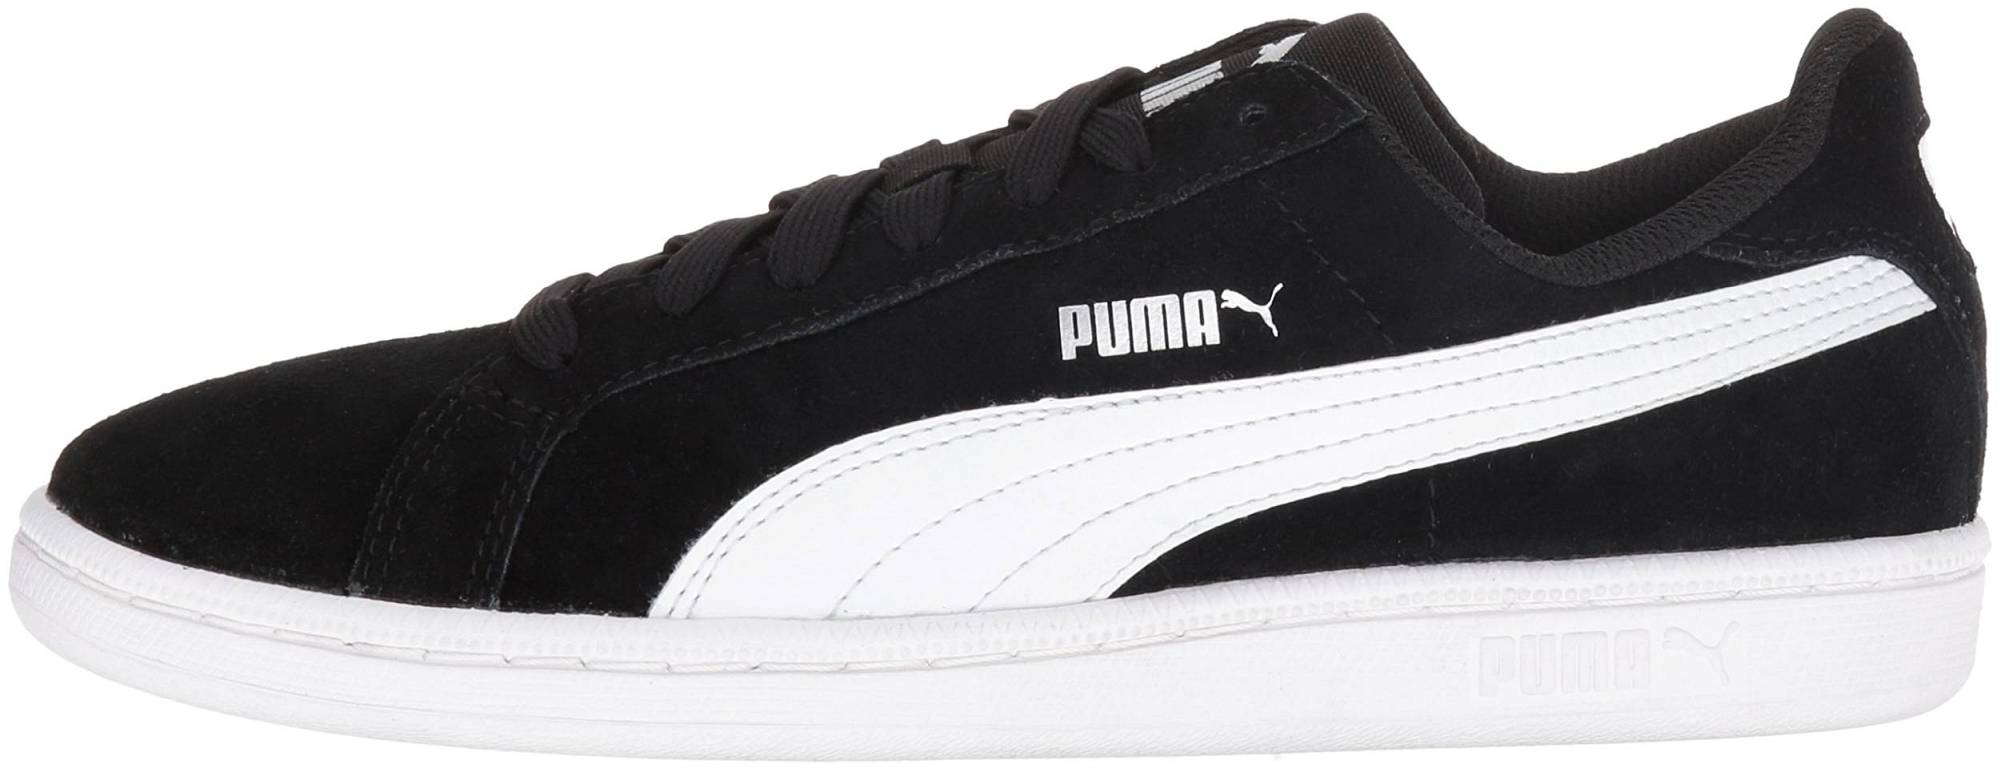 Puma Smash SD – Shoes Reviews & Reasons To Buy